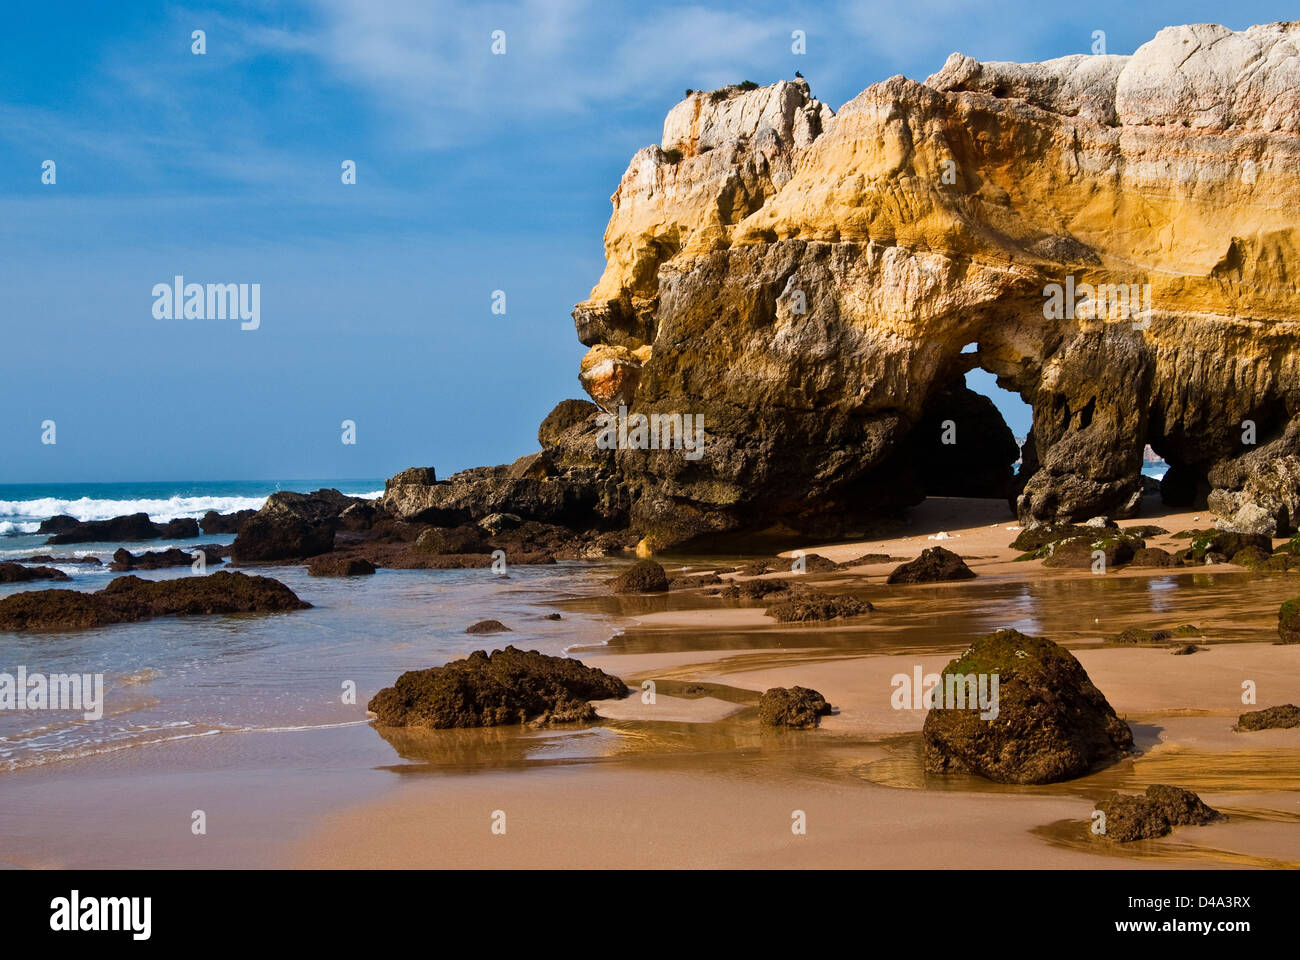 Praia da Rocha's beach area on the Atlantic Ocean in Algarve, southern Portugal Stock Photo